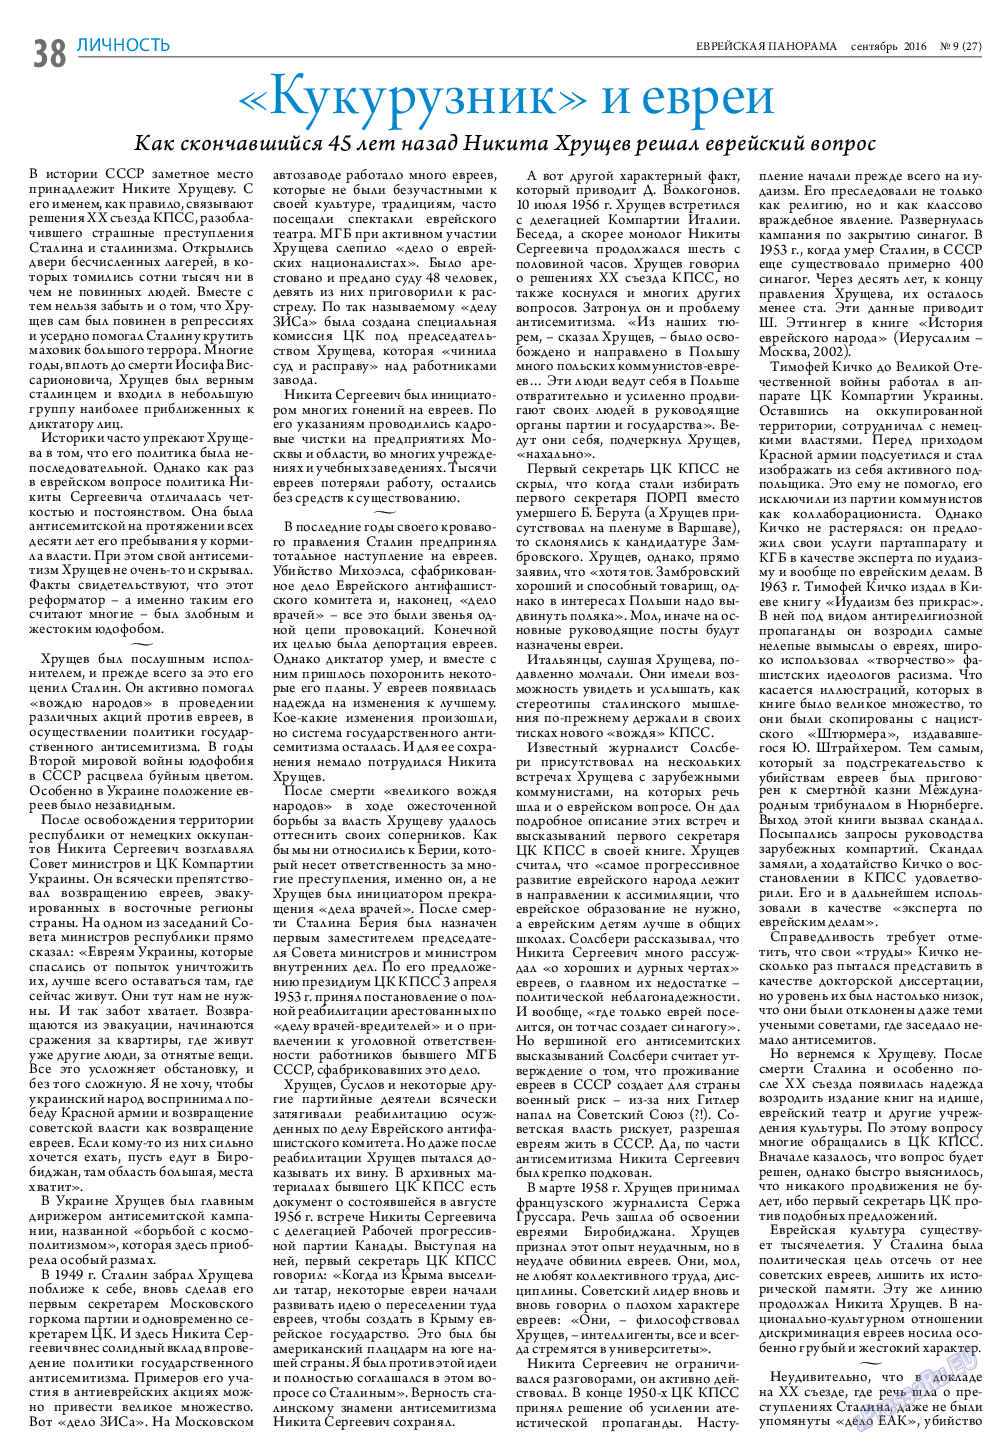 Еврейская панорама, газета. 2016 №9 стр.38